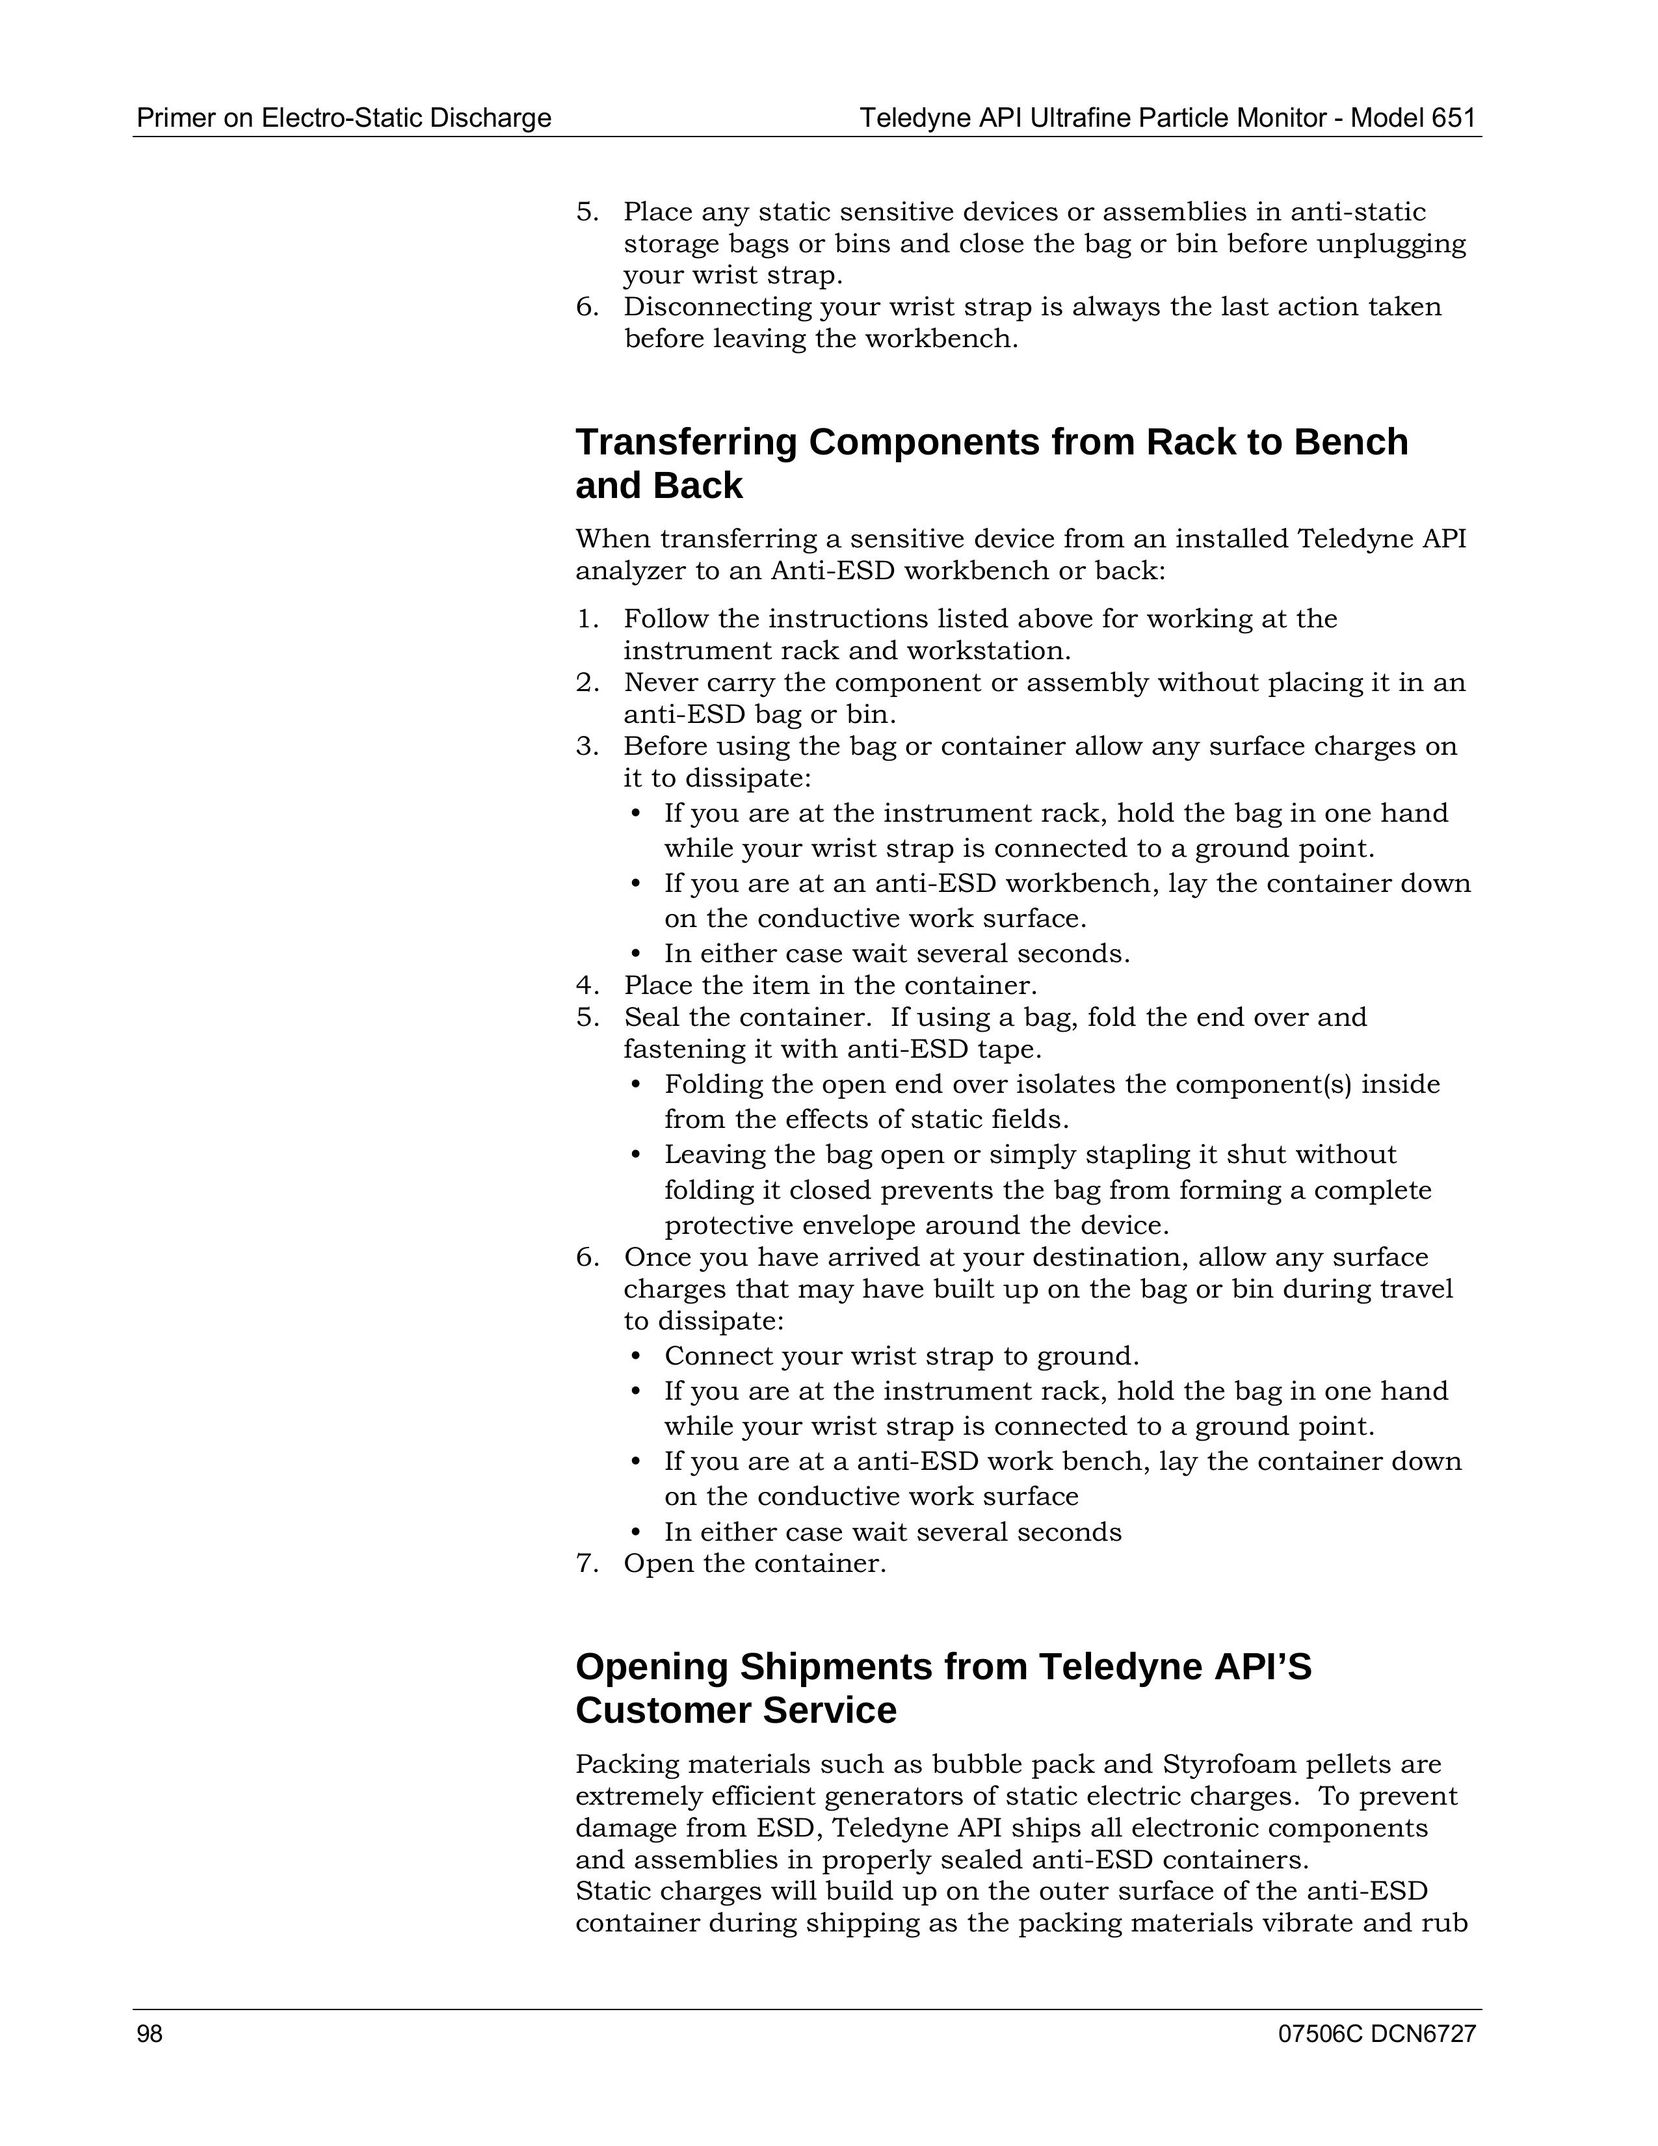 Teledyne 651 Computer Monitor User Manual (Page 100)